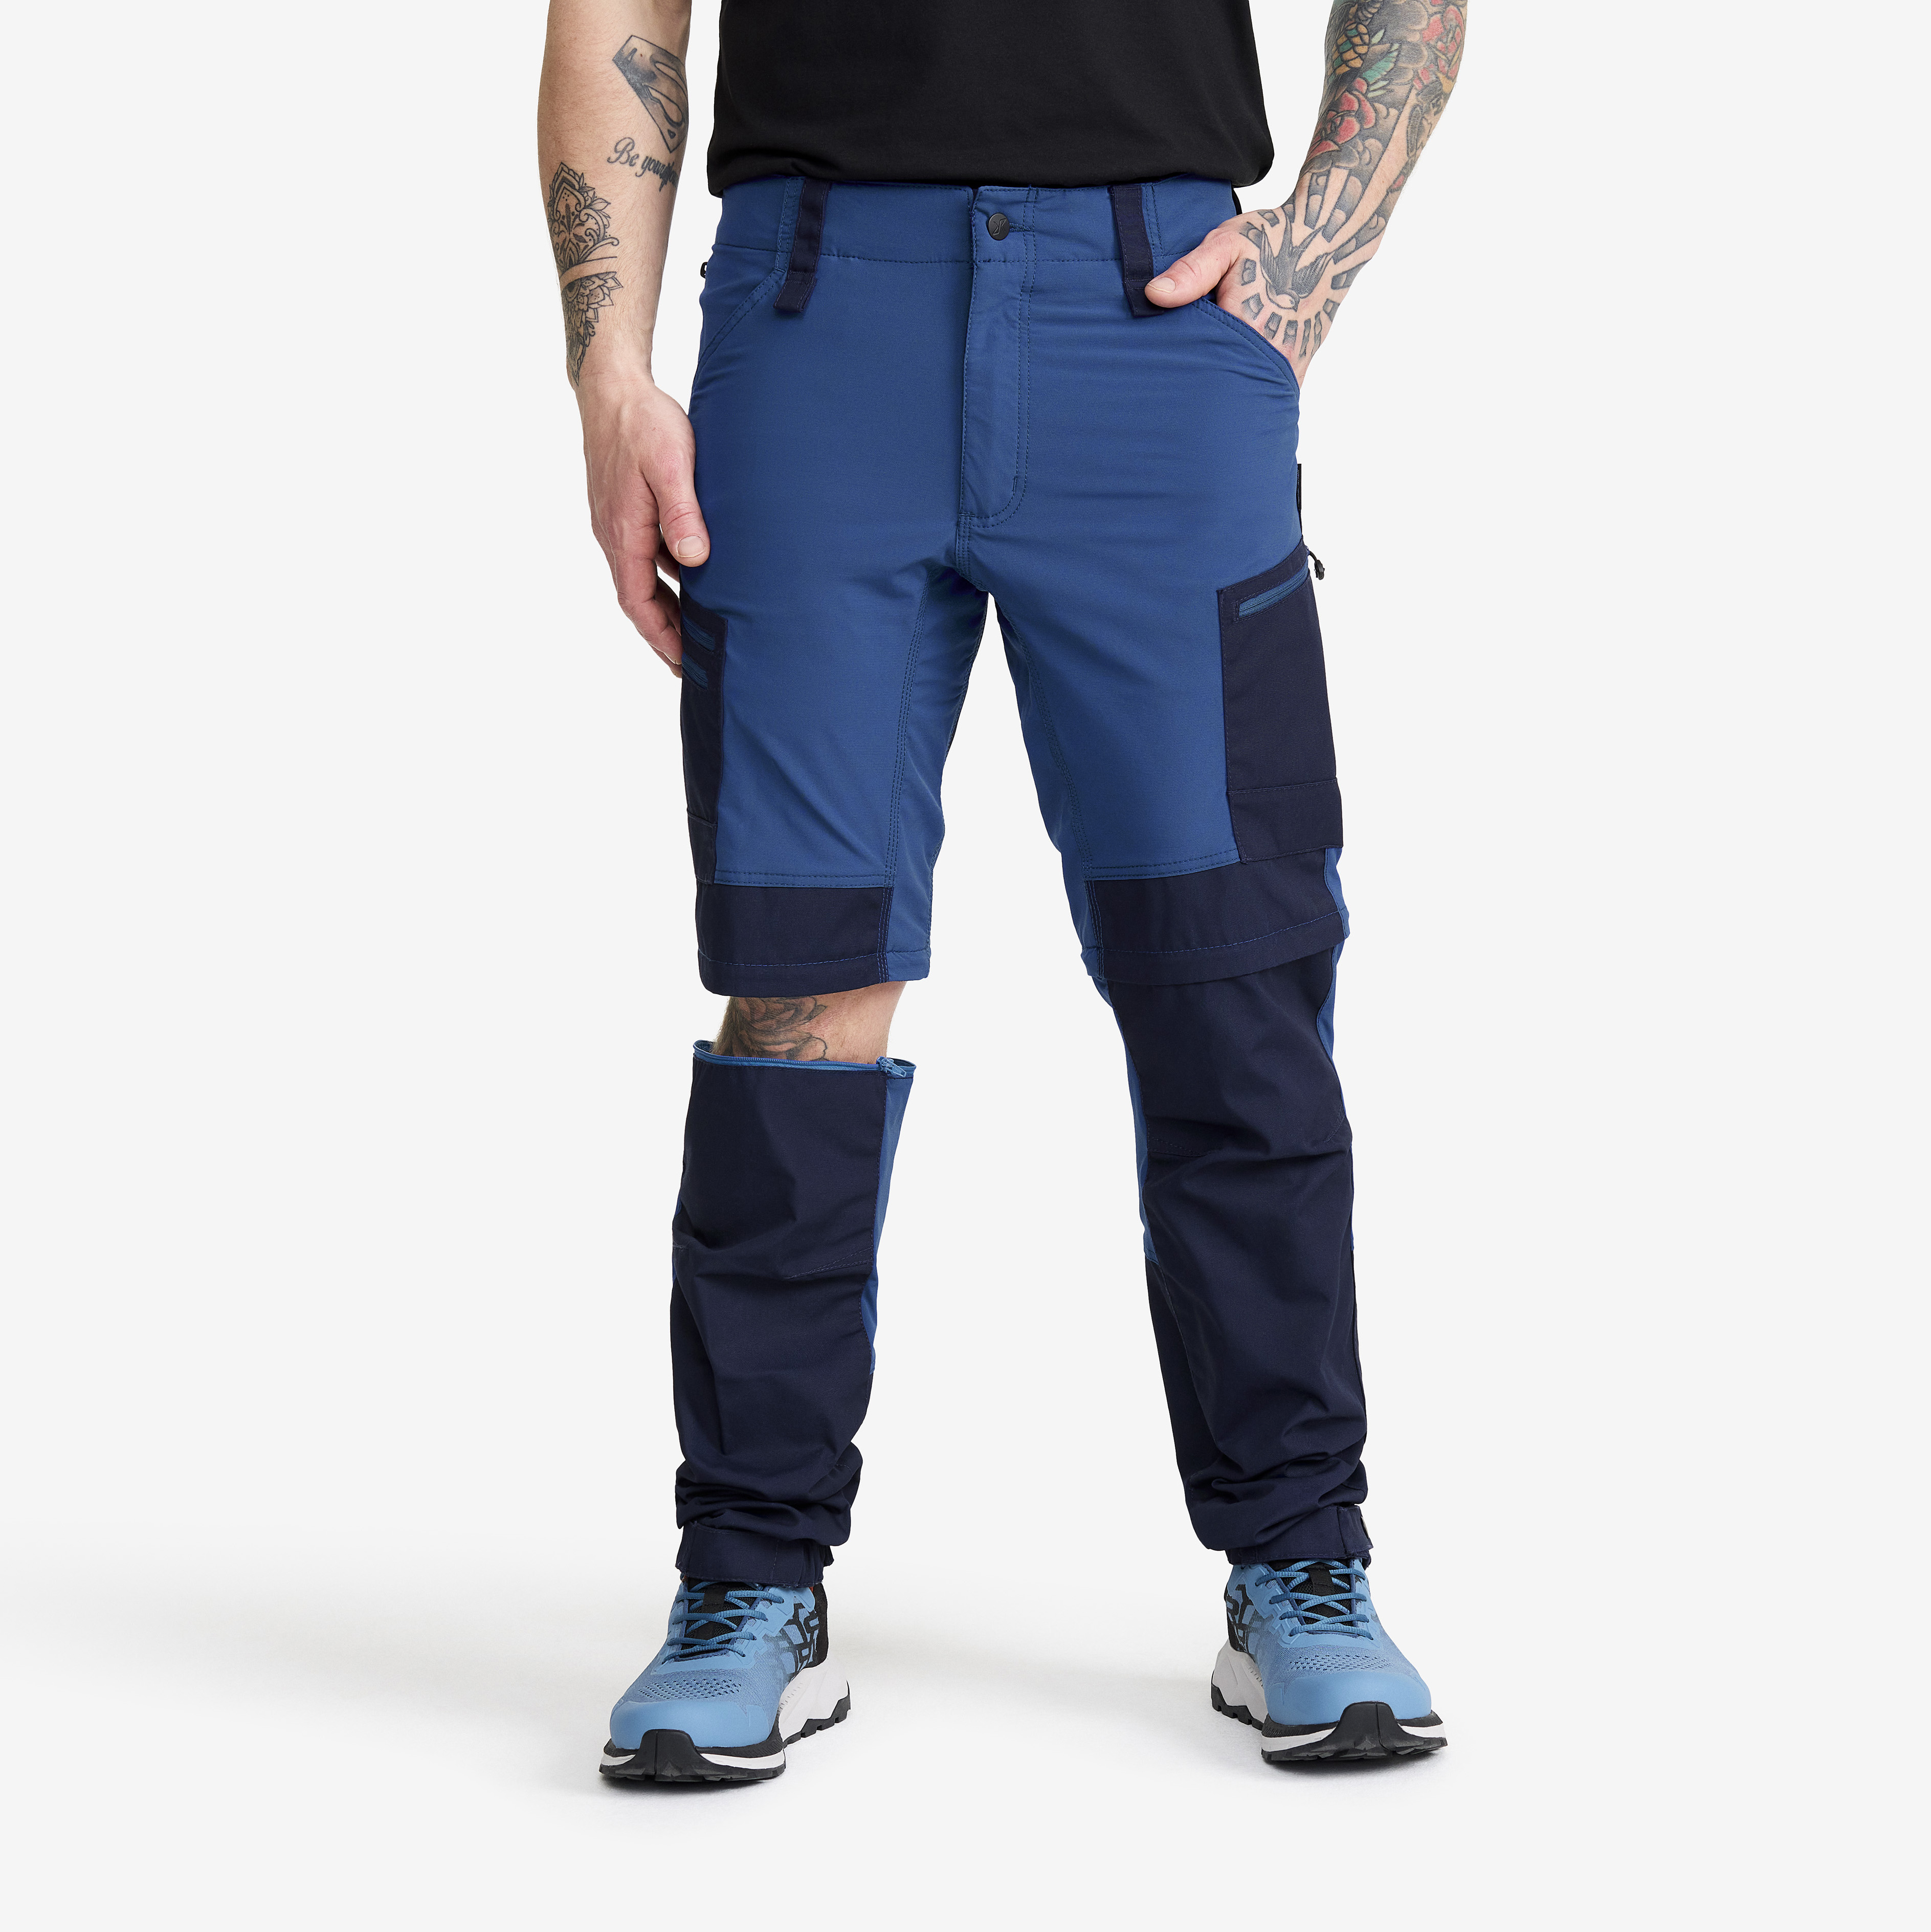 RVRC GP Pro Zip-off hiking pants for men in dark blue